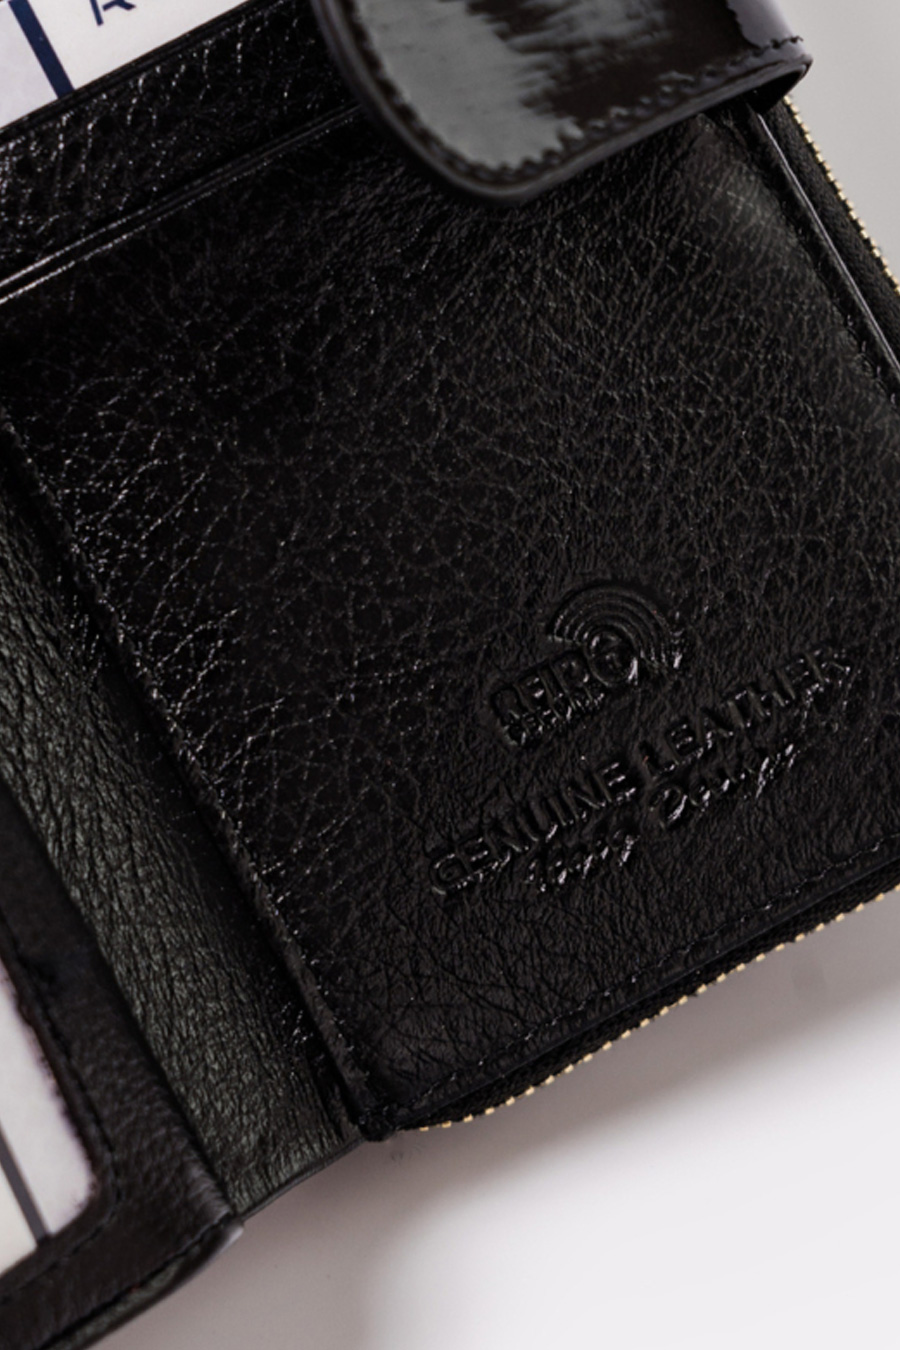 Wallet LORENTI 76116-SH-RFID-1500-BLACK